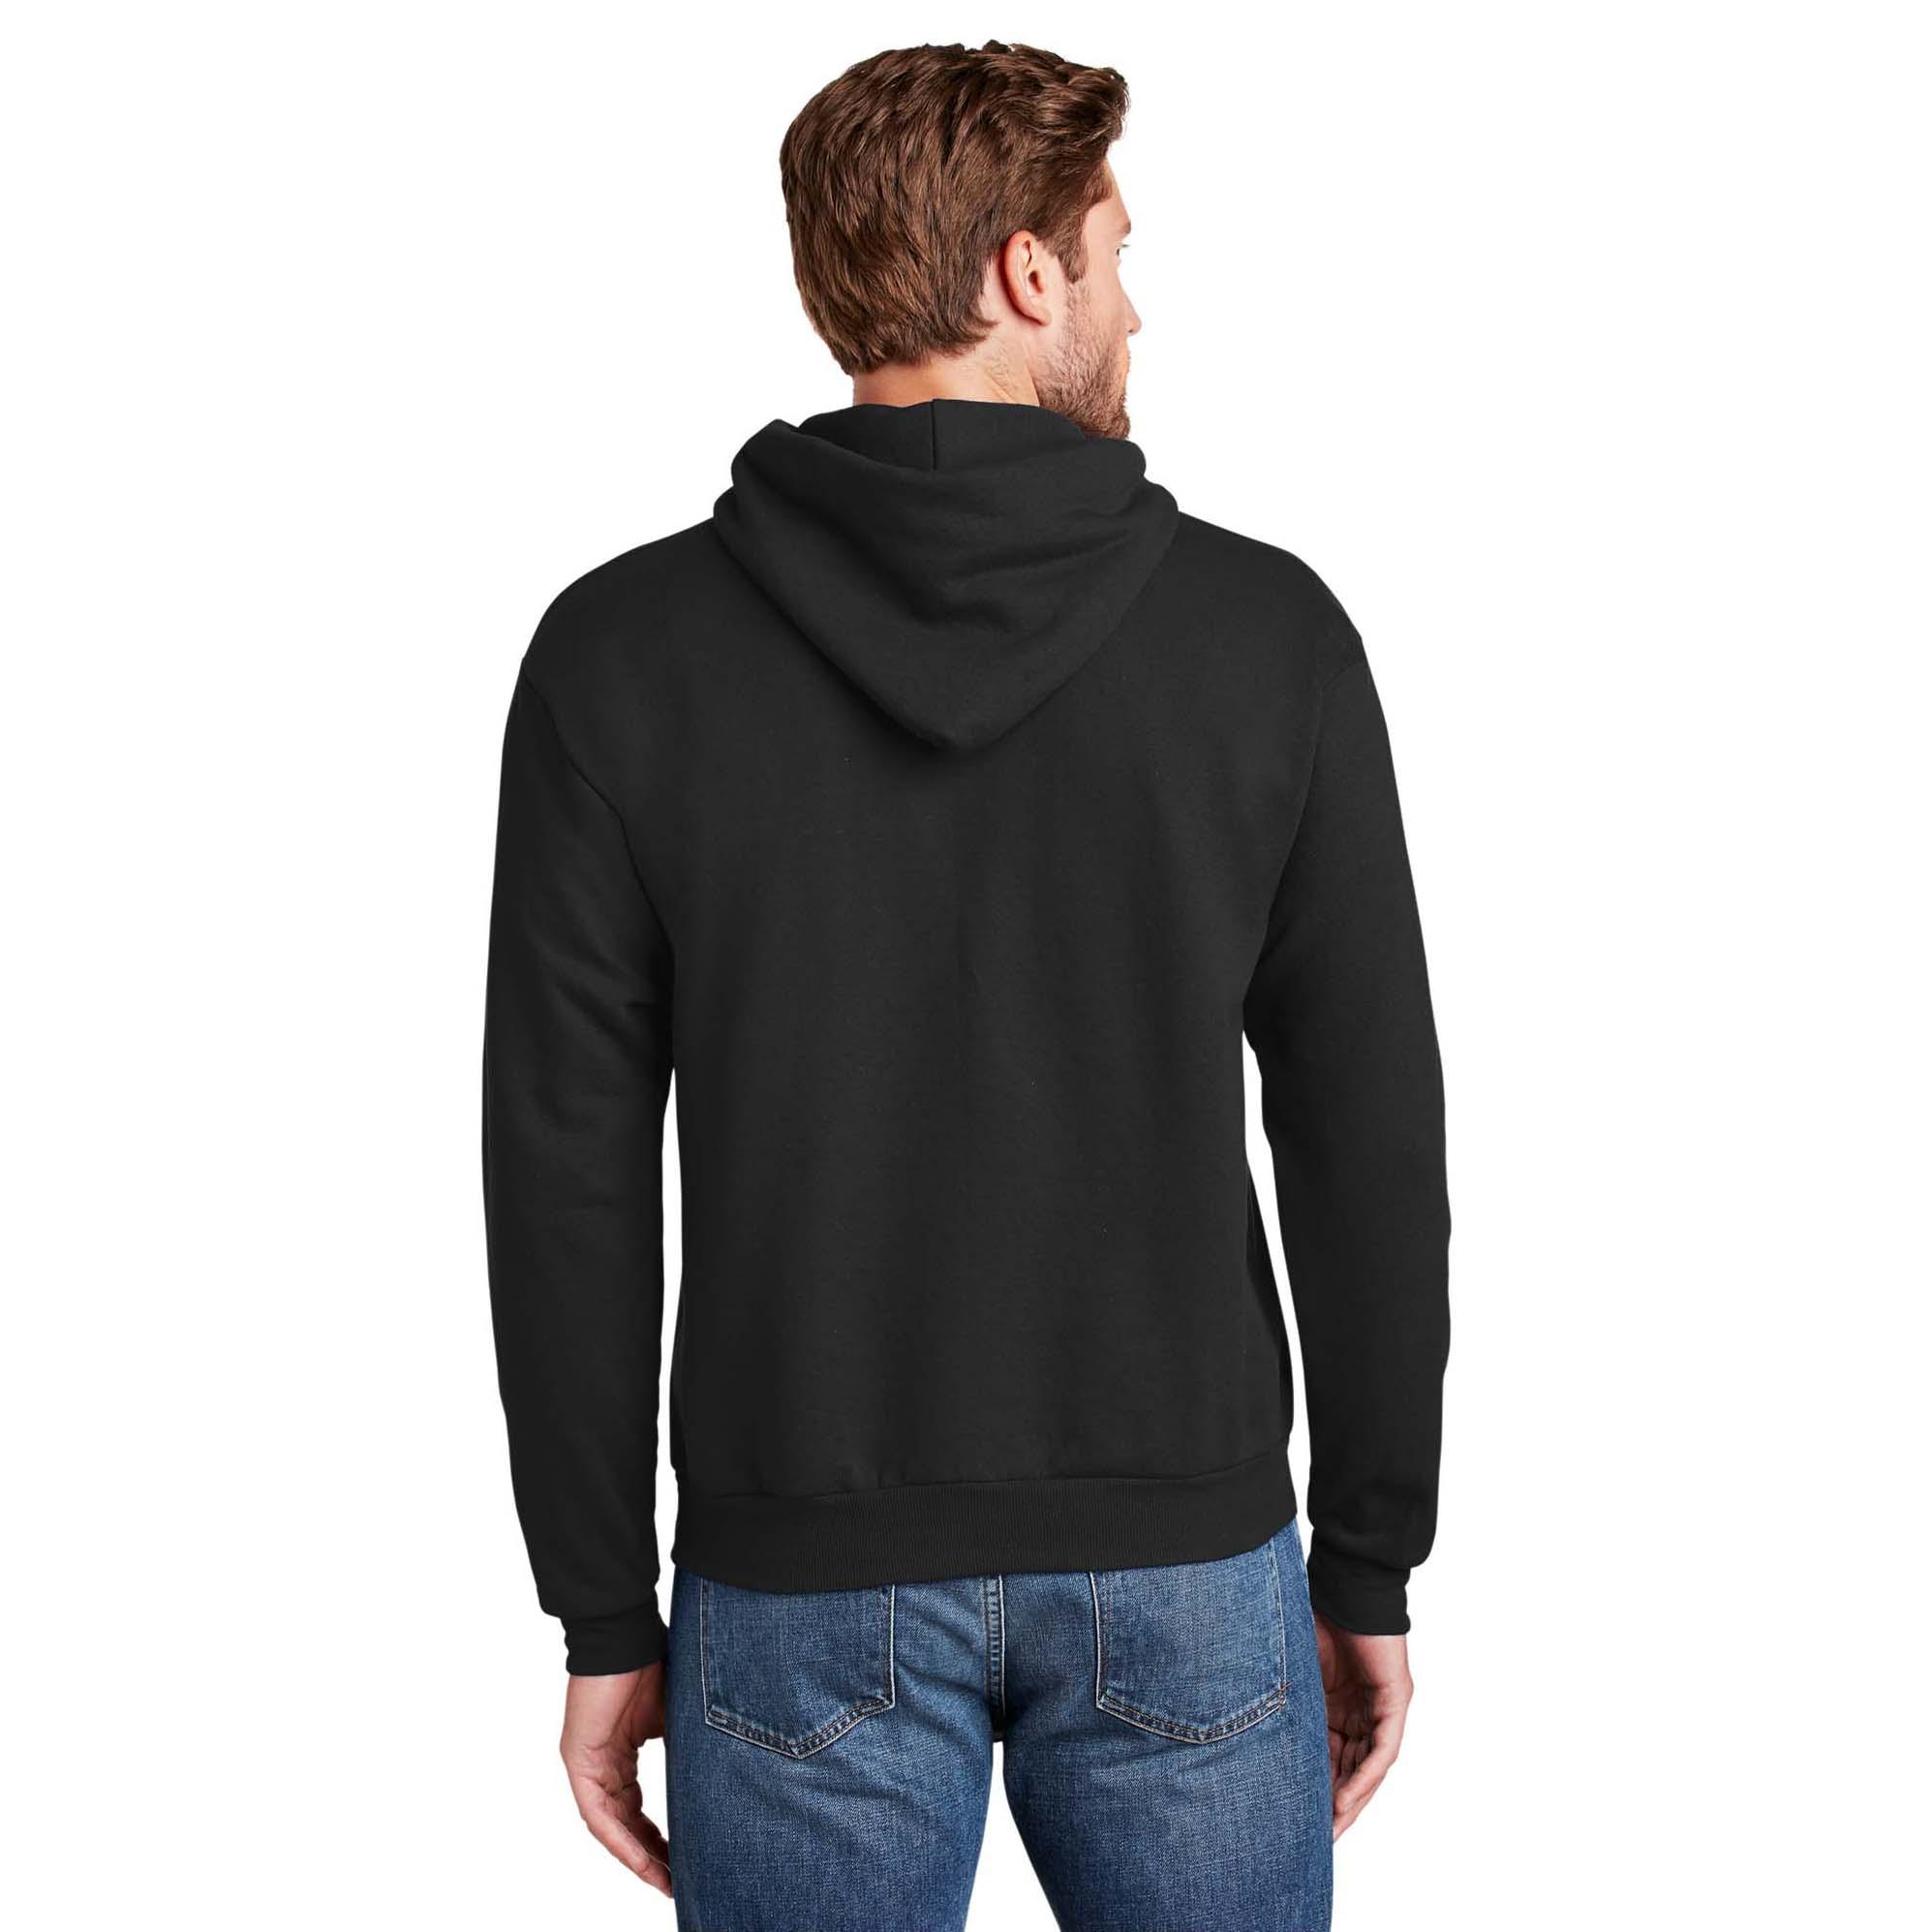 Hanes P170 EcoSmart Pullover Hooded Sweatshirt - Black | Full Source